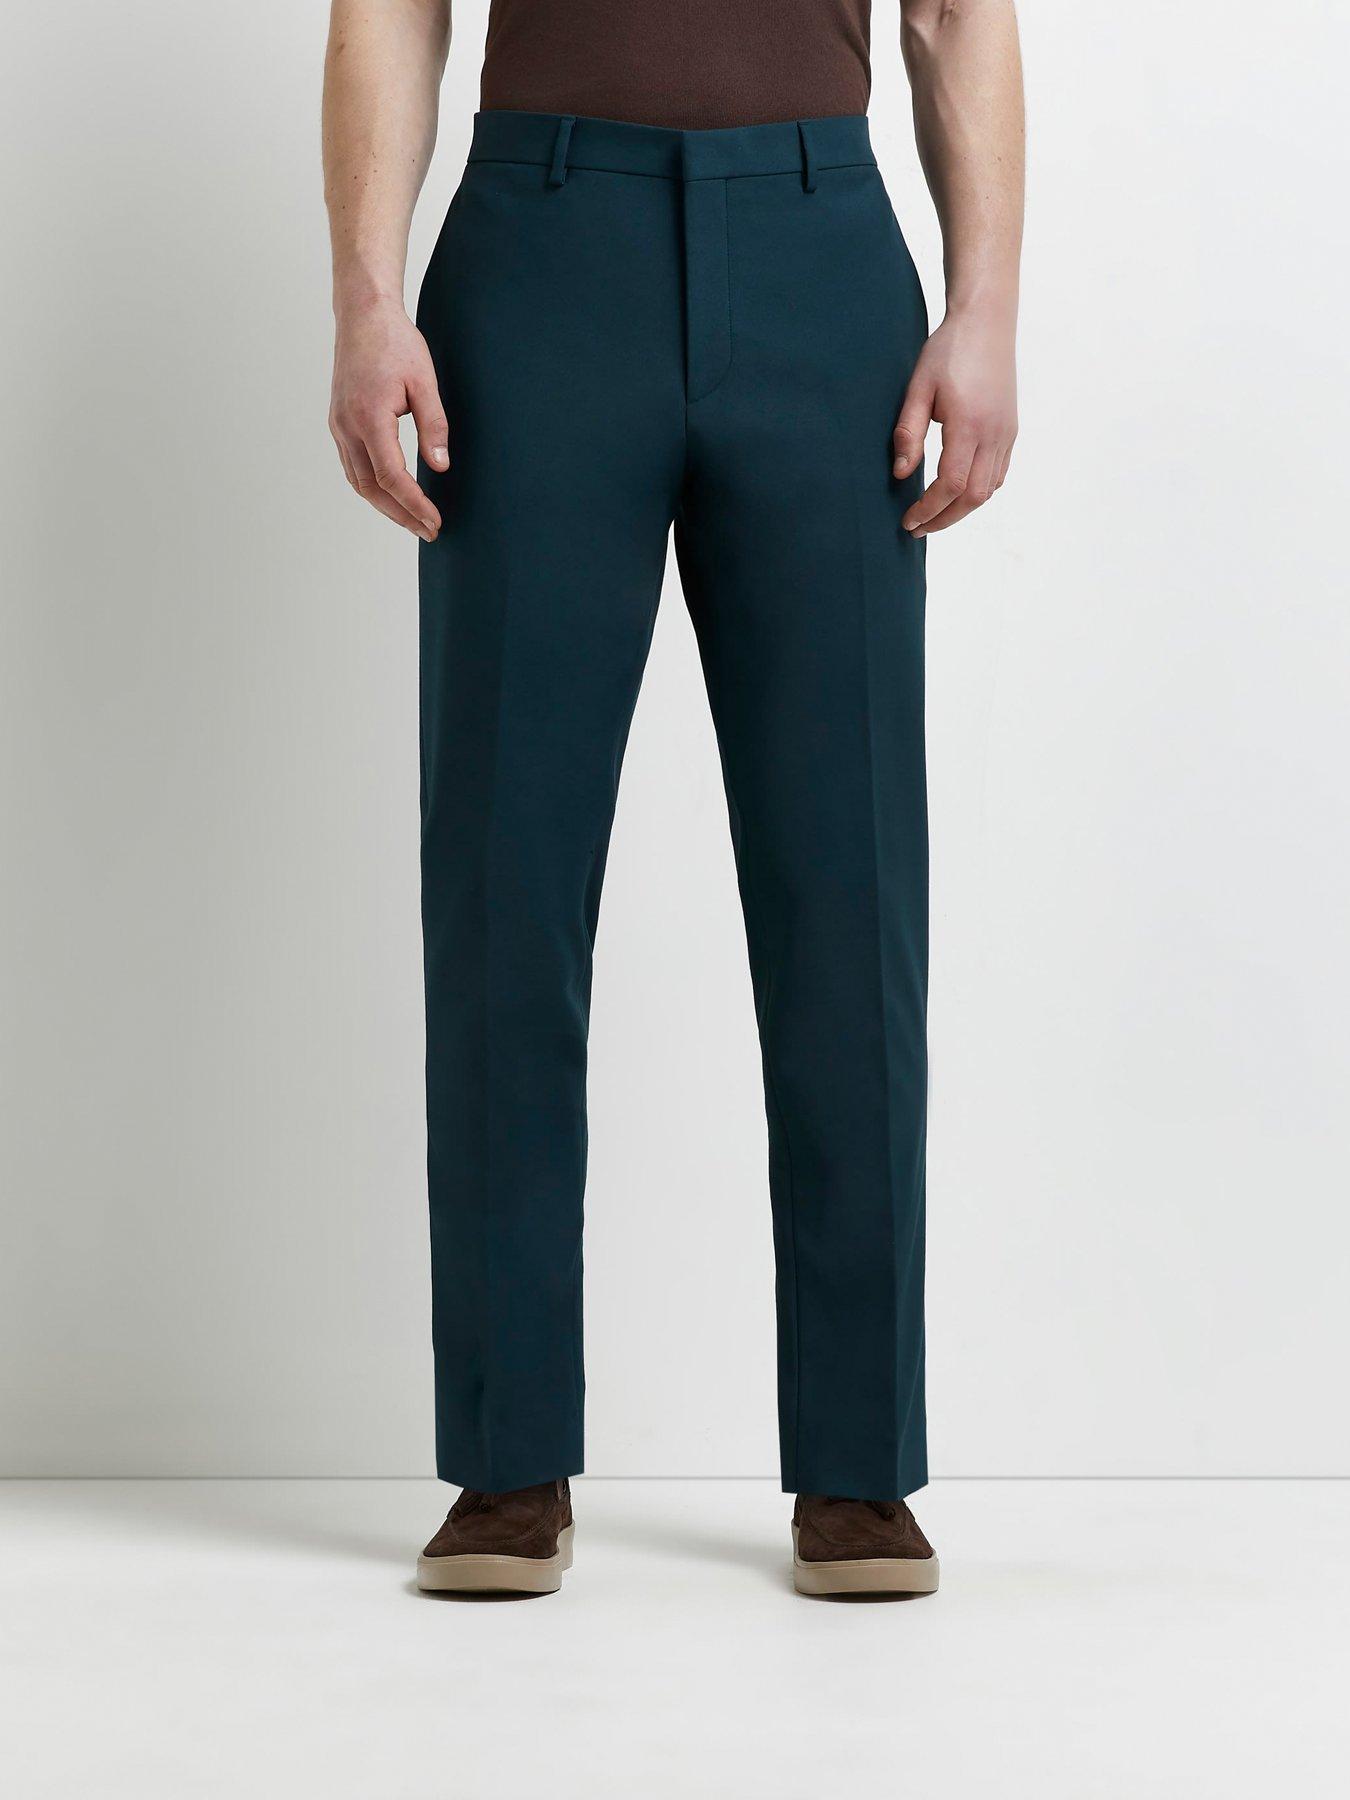 River Island Green Slim Teal Suit Trouser | littlewoods.com